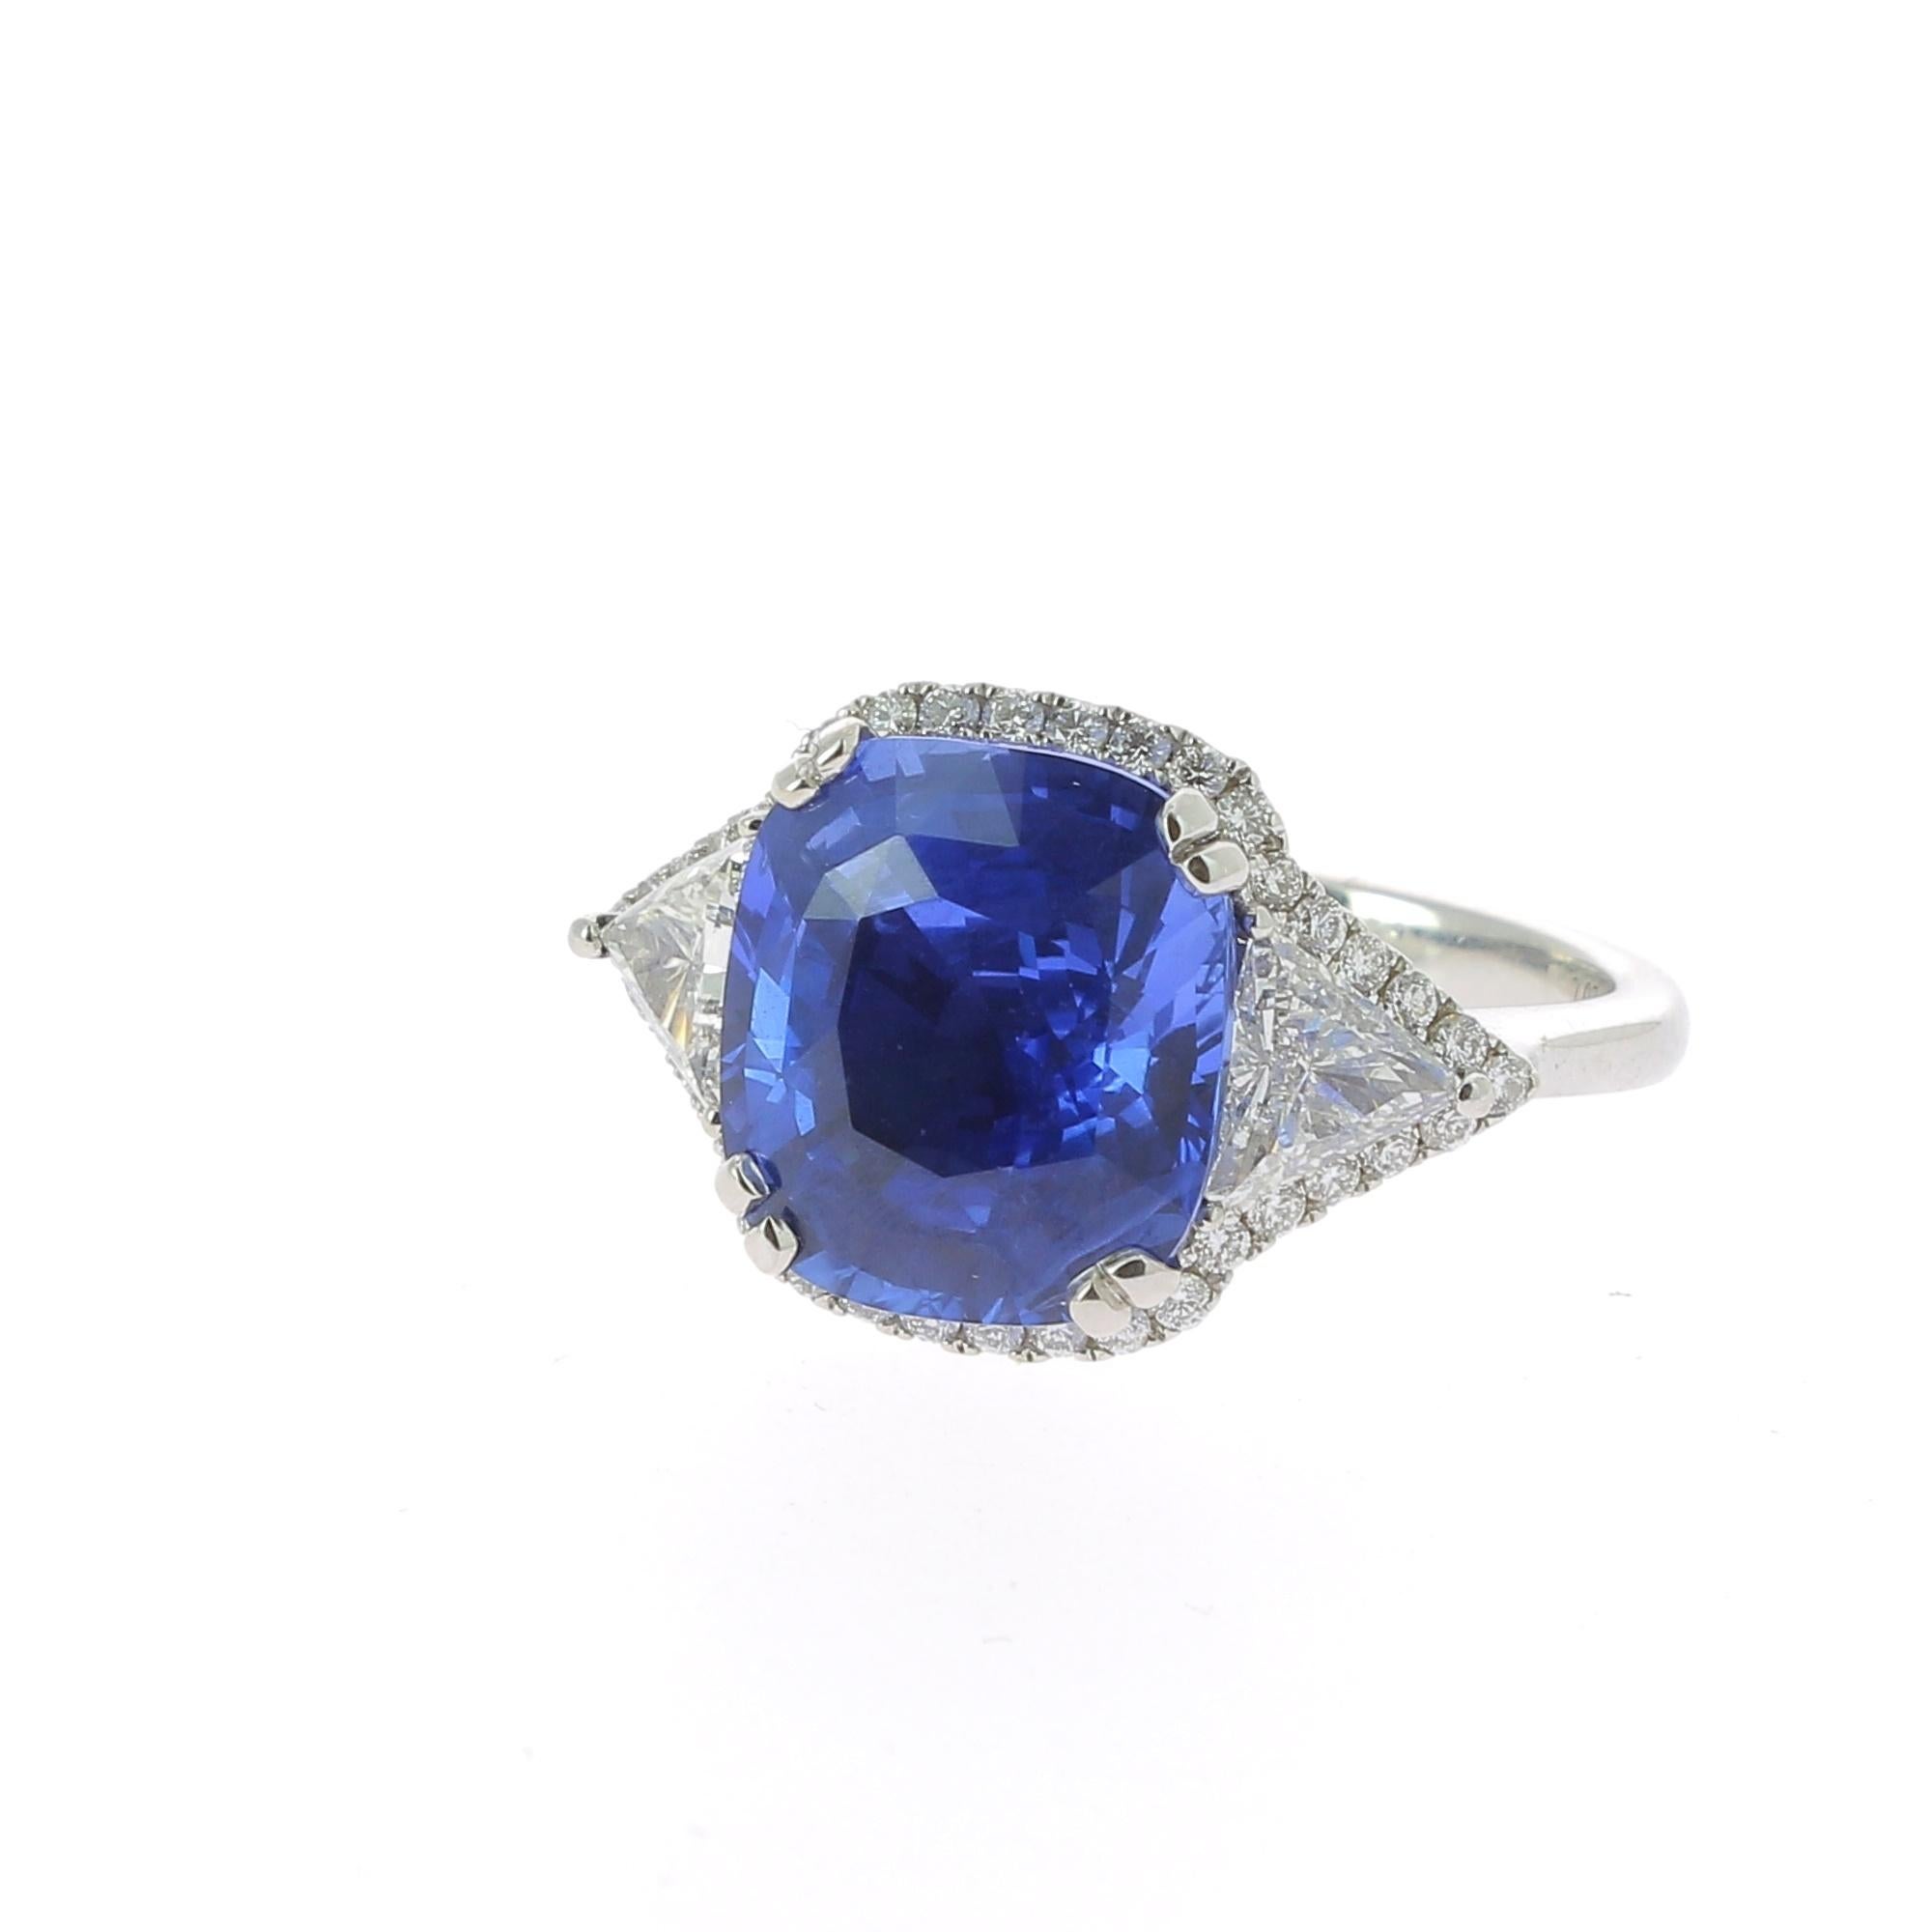 Oval Cut 7.16 Carat Ceylon Intense Blue Sapphire Cocktail Ring Set with Round Diamond